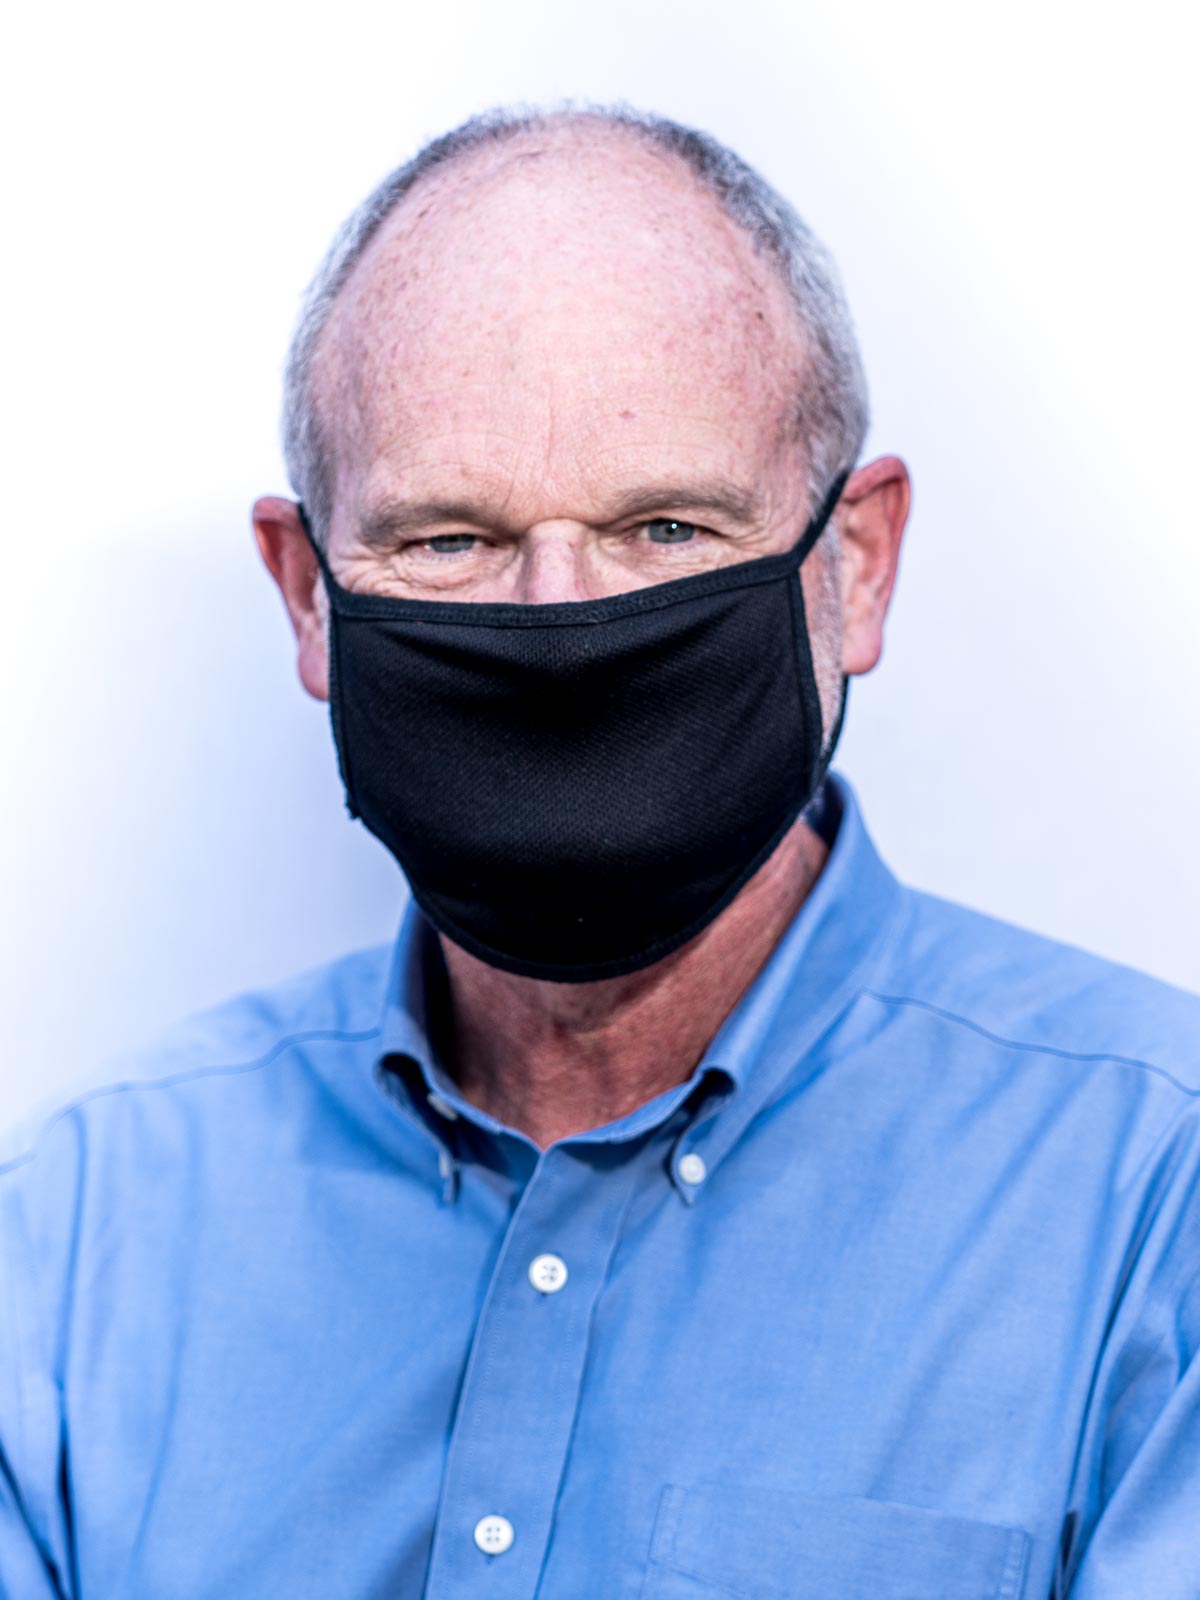 Dr. William Petri wearing a mask headshot